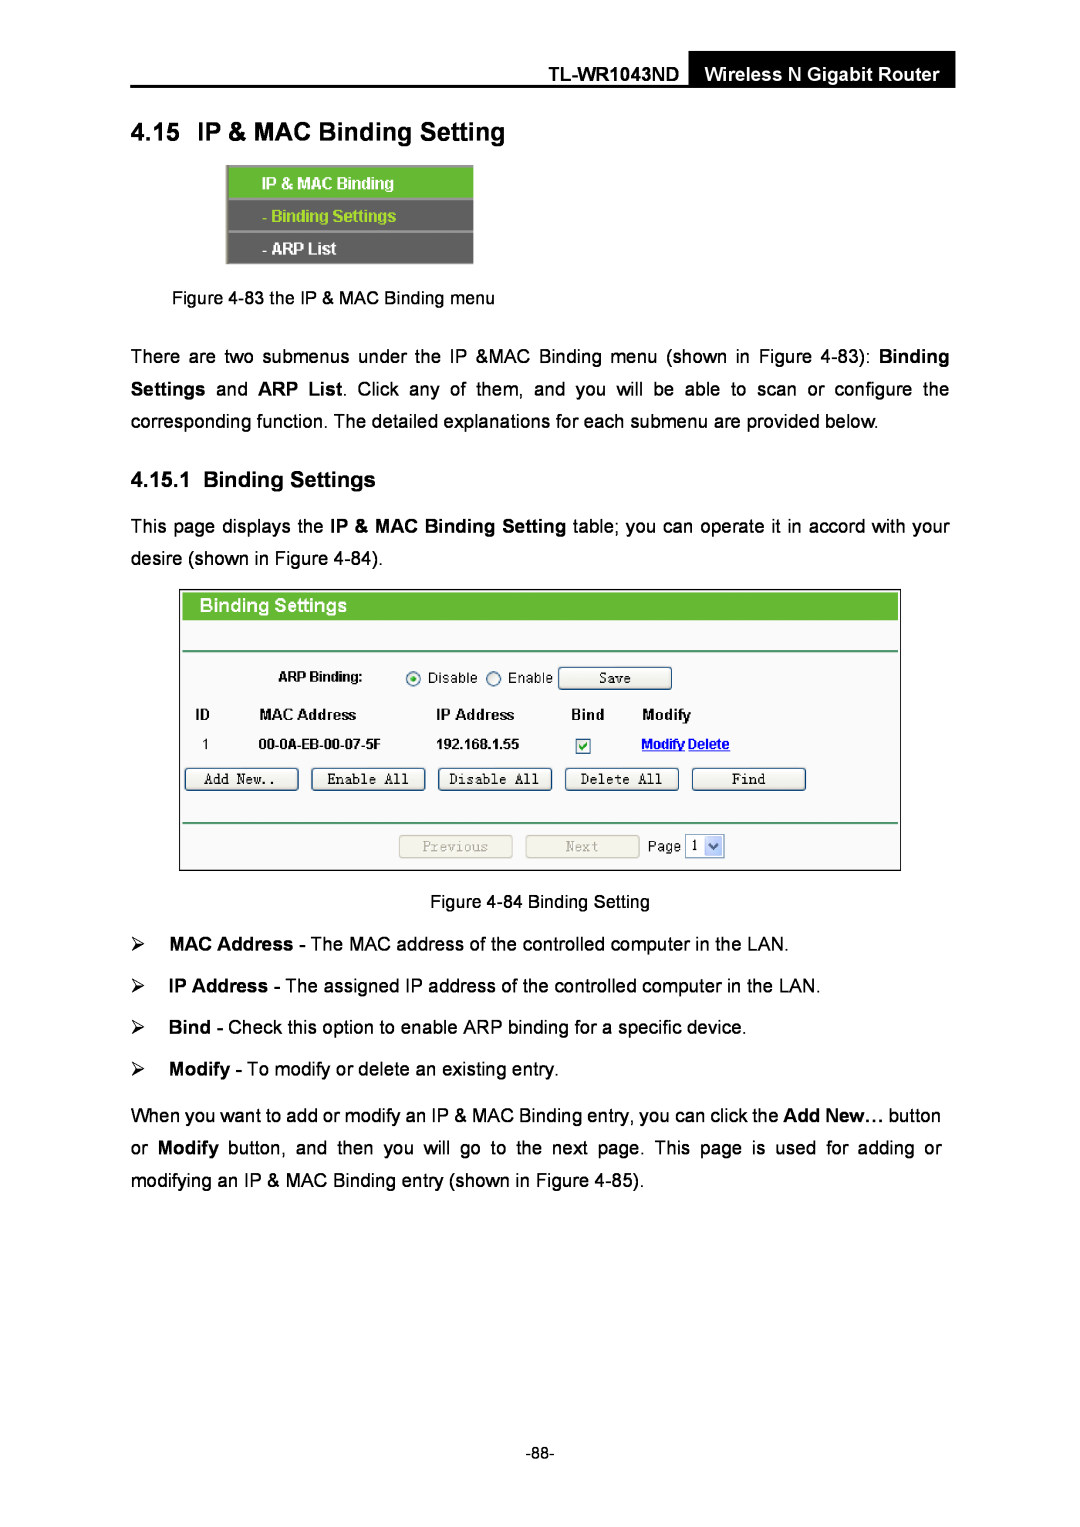 TP-Link manual 4.15 IP & MAC Binding Setting, Binding Settings, TL-WR1043ND Wireless N Gigabit Router 